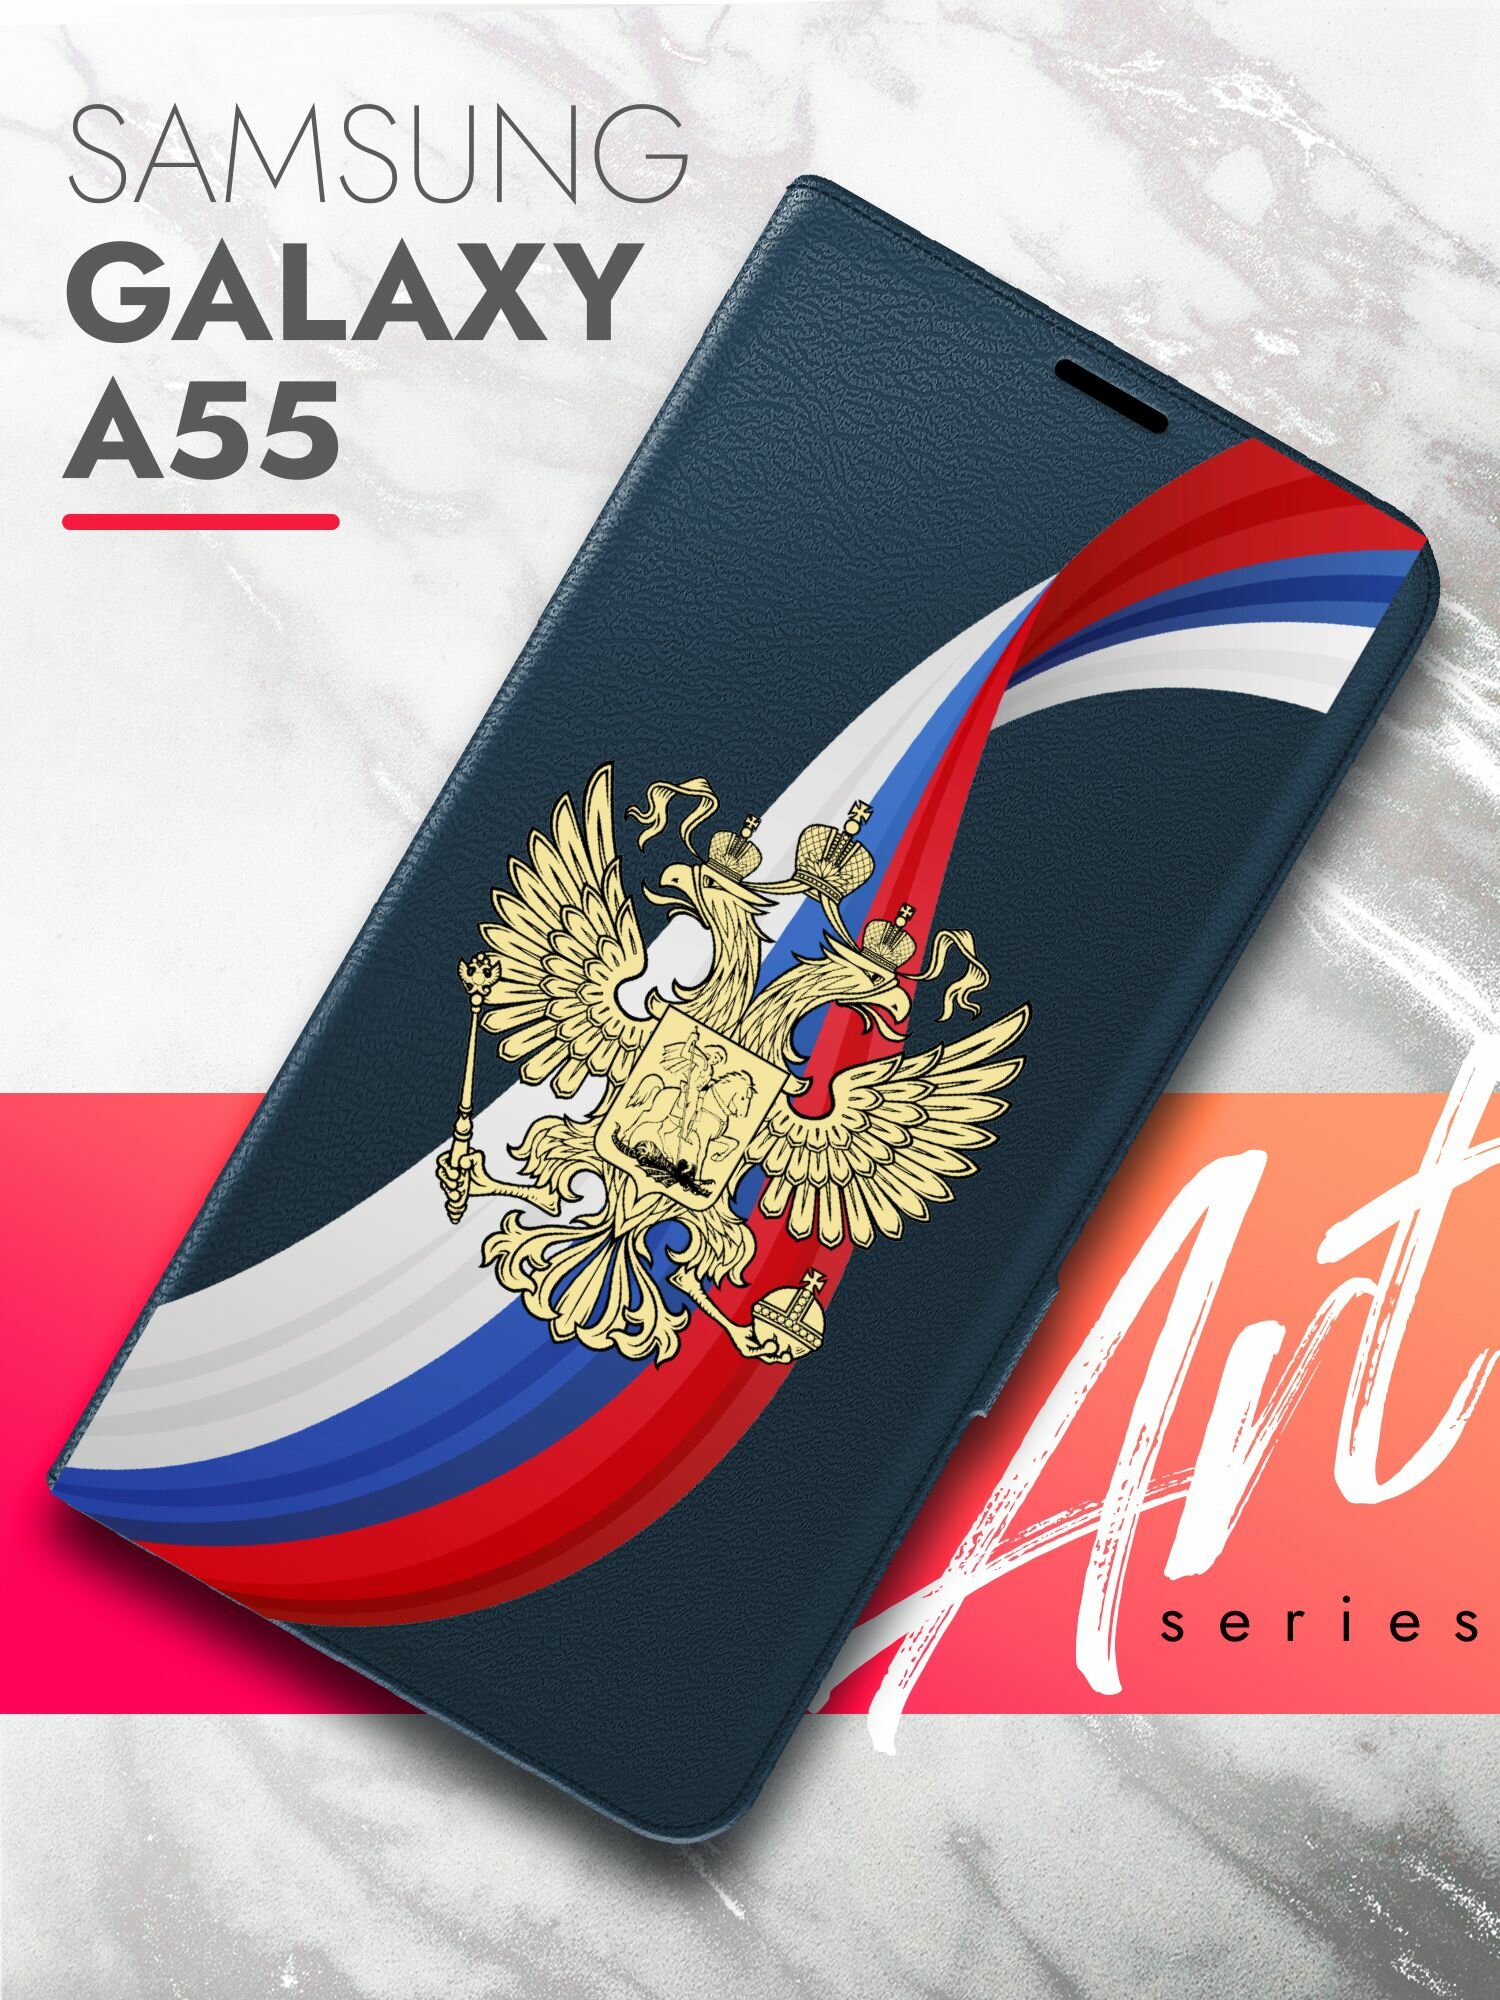 Чехол на Samsung Galaxy A55 (Самсунг Галакси А55) синий книжка эко-кожа подставка отделение для карт магнит Book case, Brozo (принт) Россия Флаг-Лента